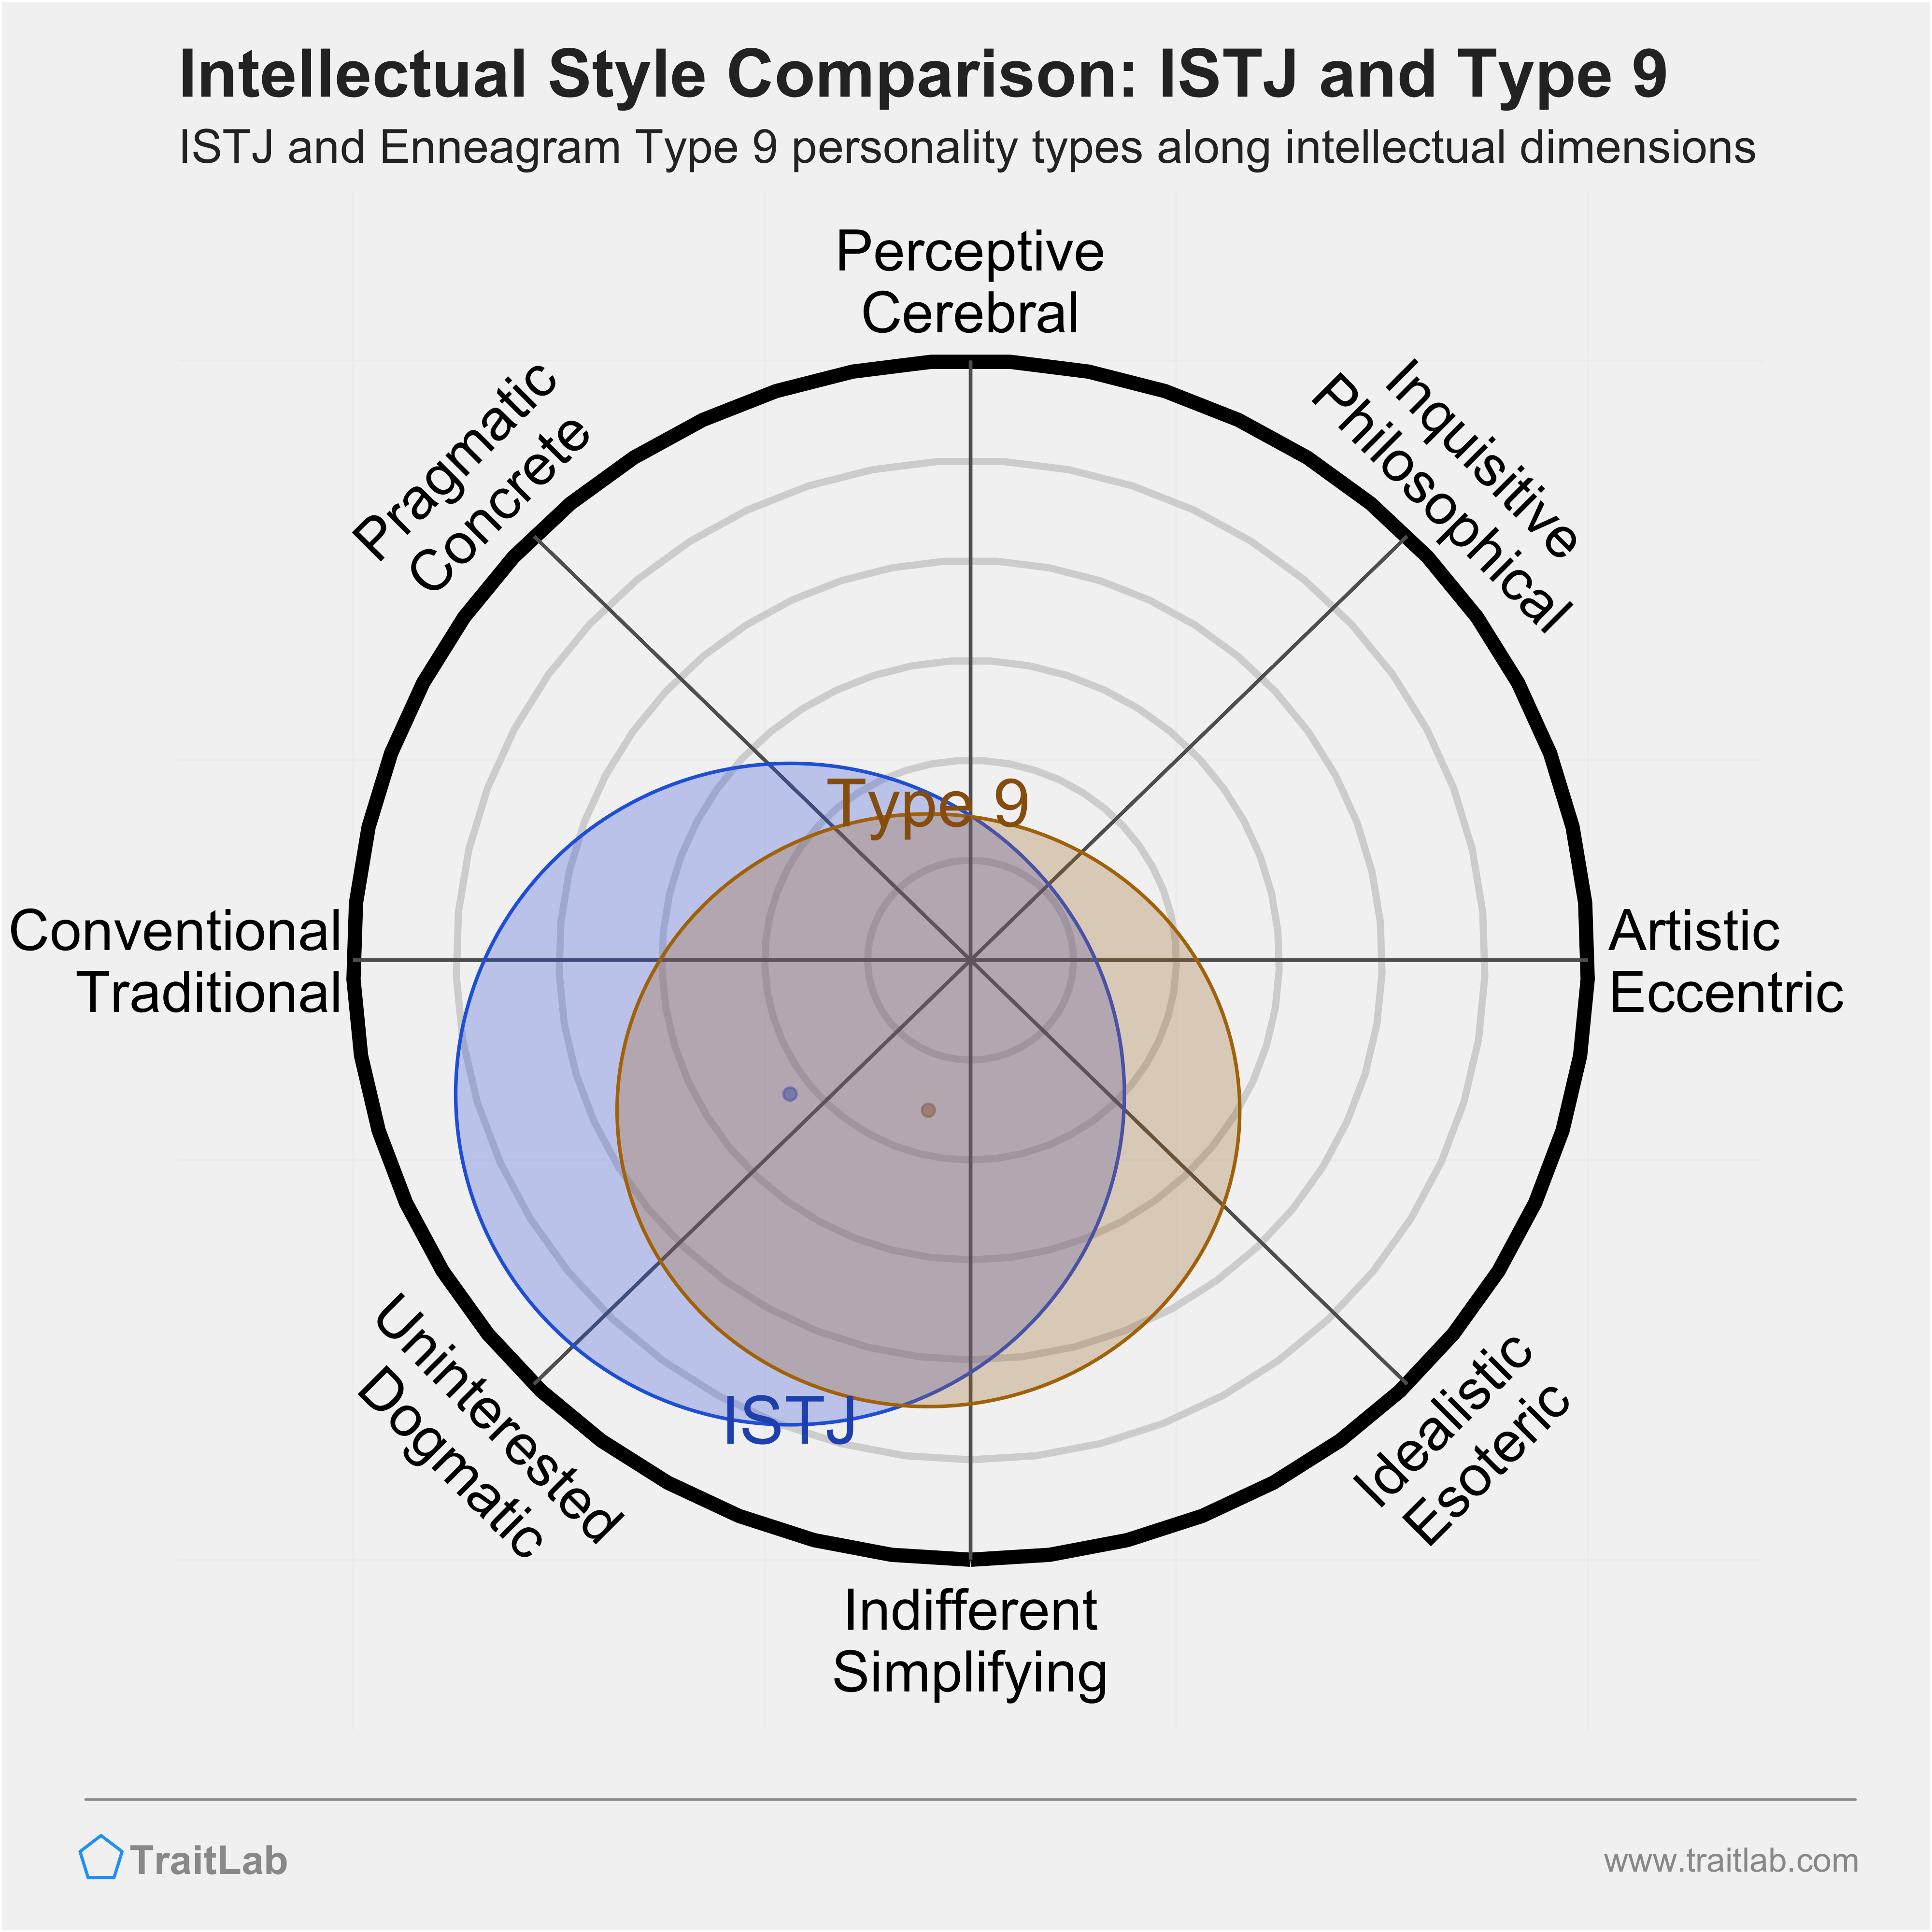 ISTJ and Type 9 comparison across intellectual dimensions